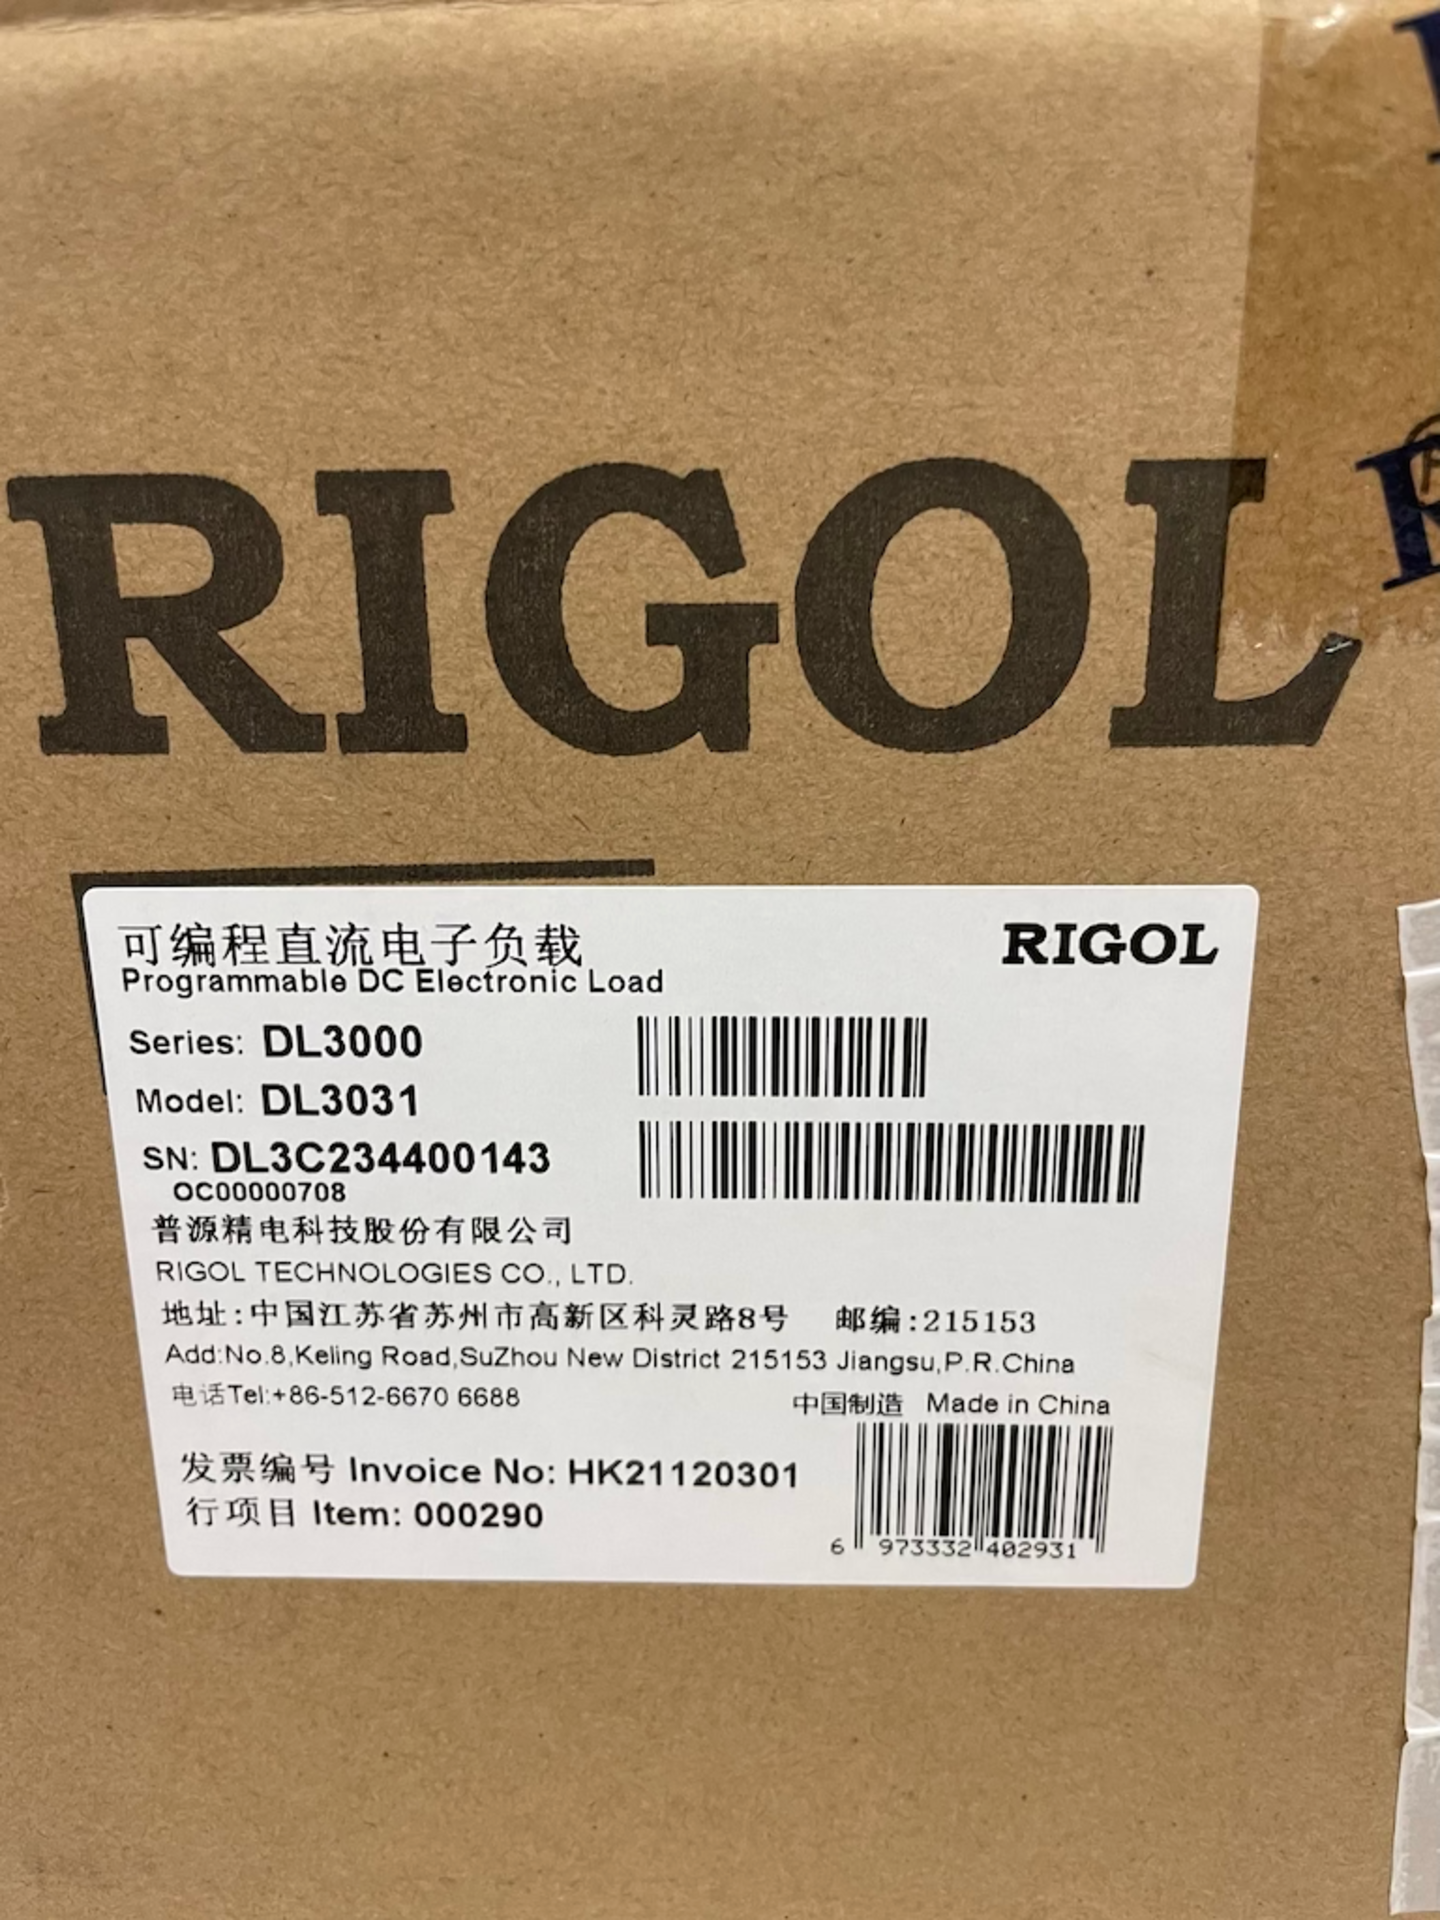 Rigol DL3031 Precision DC Electronic Load SN/ DL3C234400143 - Located in Santa Clara, CA - Image 7 of 9